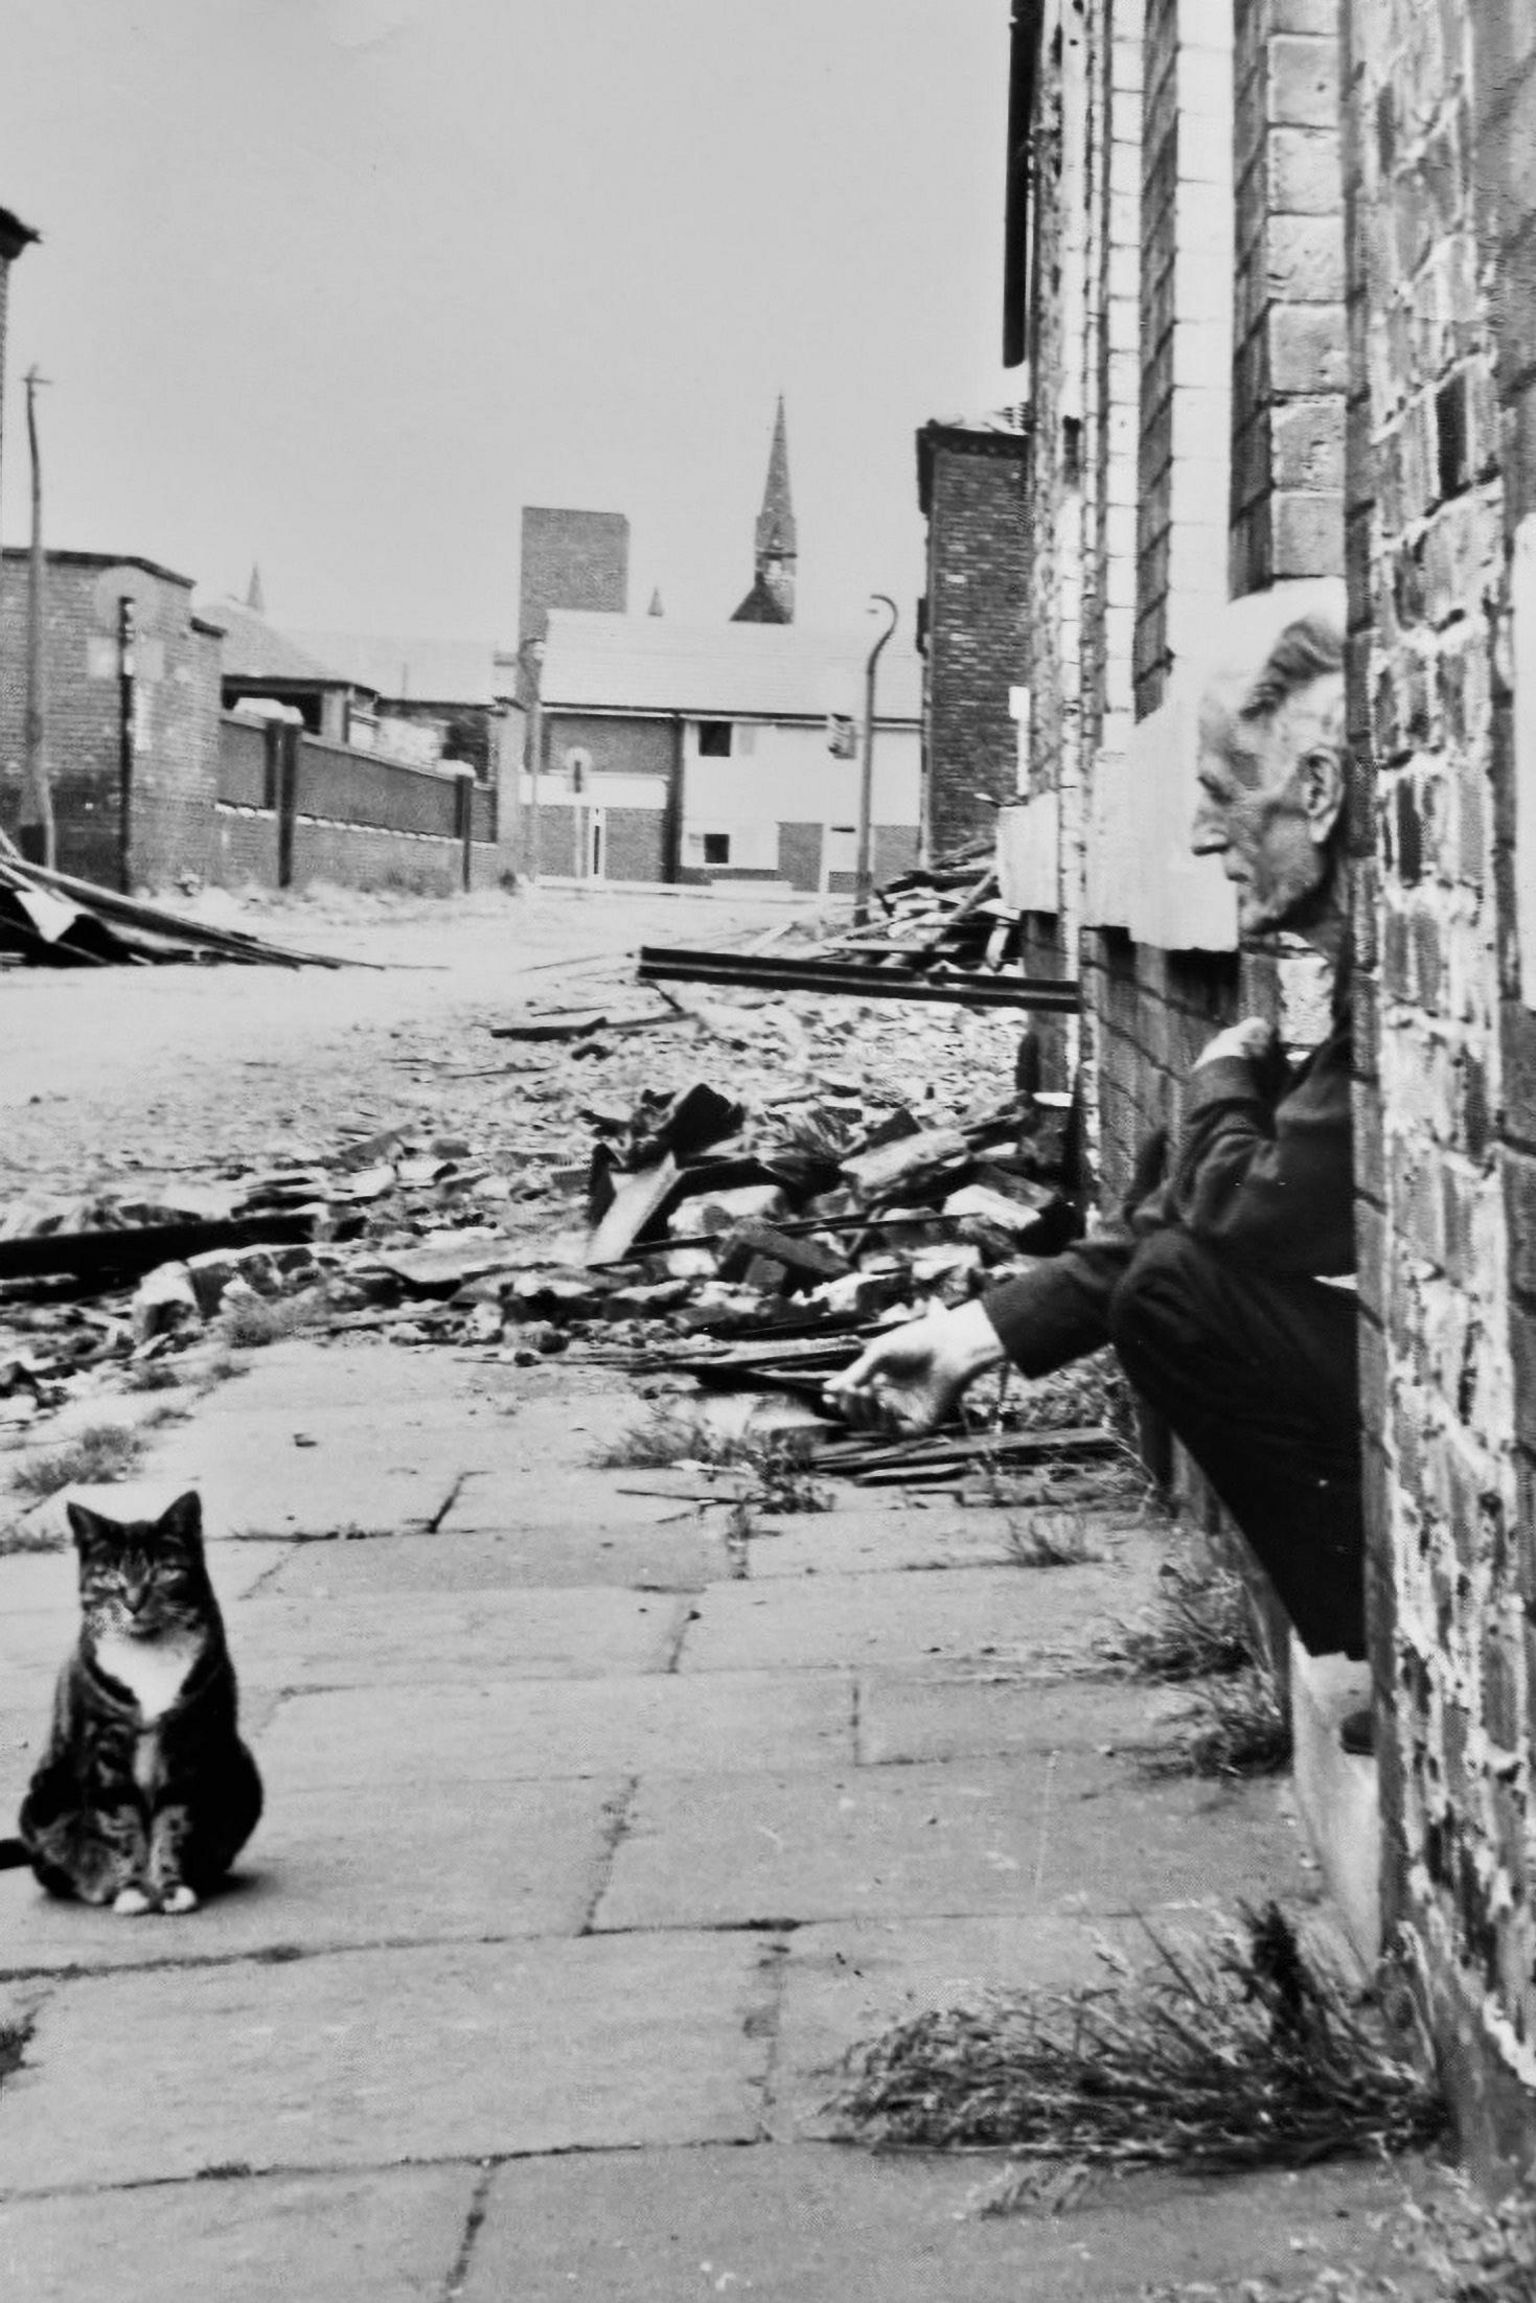 Carole Burtonwood, The last resident and his cat, Nashville Street, Ordsall, 1977